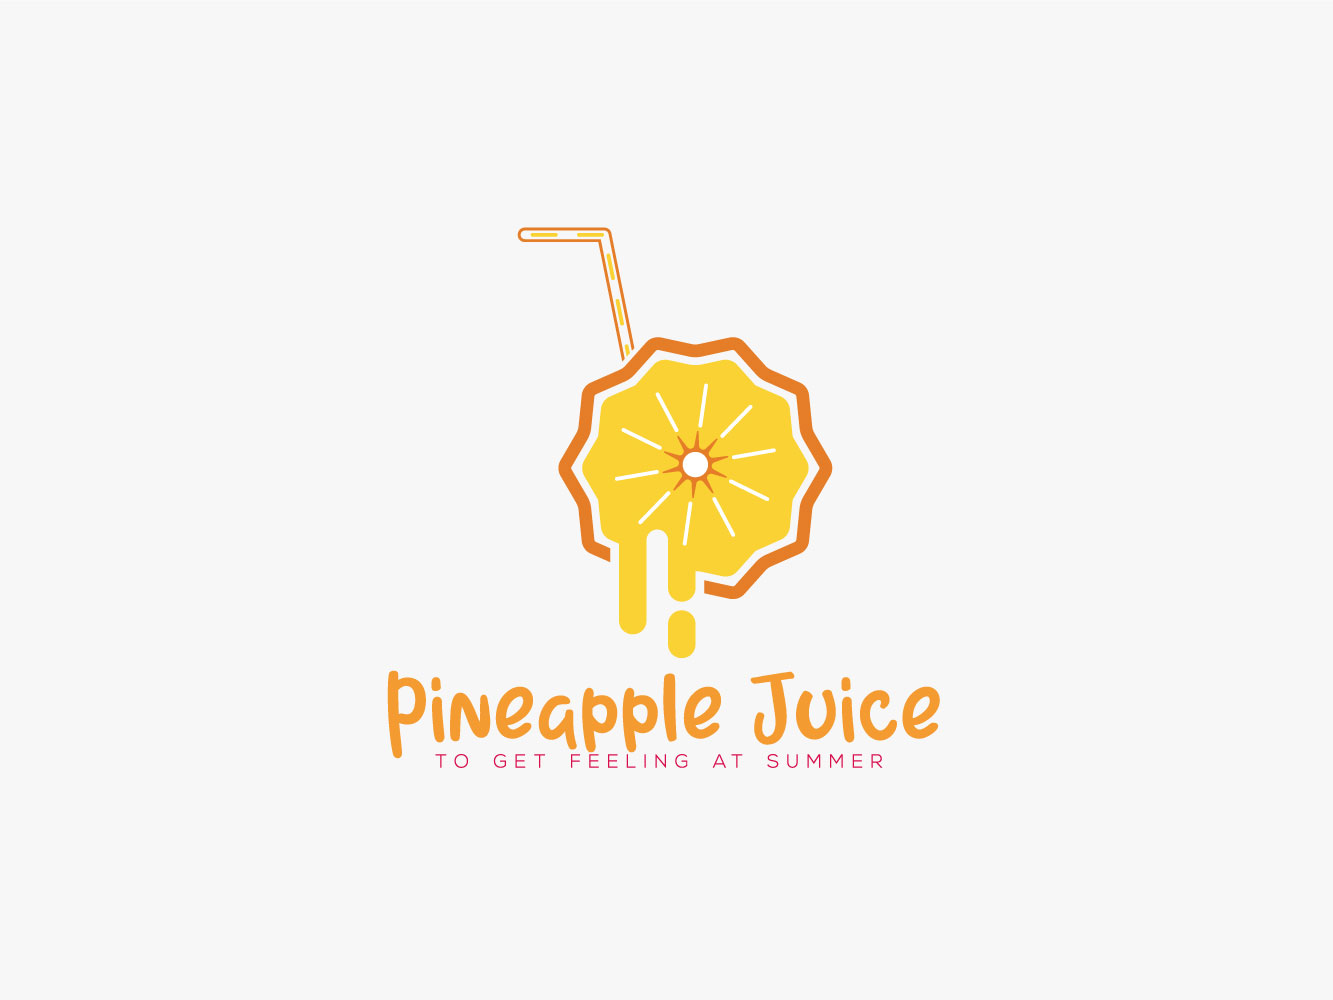 Fruit Juice Logo Design Vector, Pineapple Drinking Fruit Juice With Glass